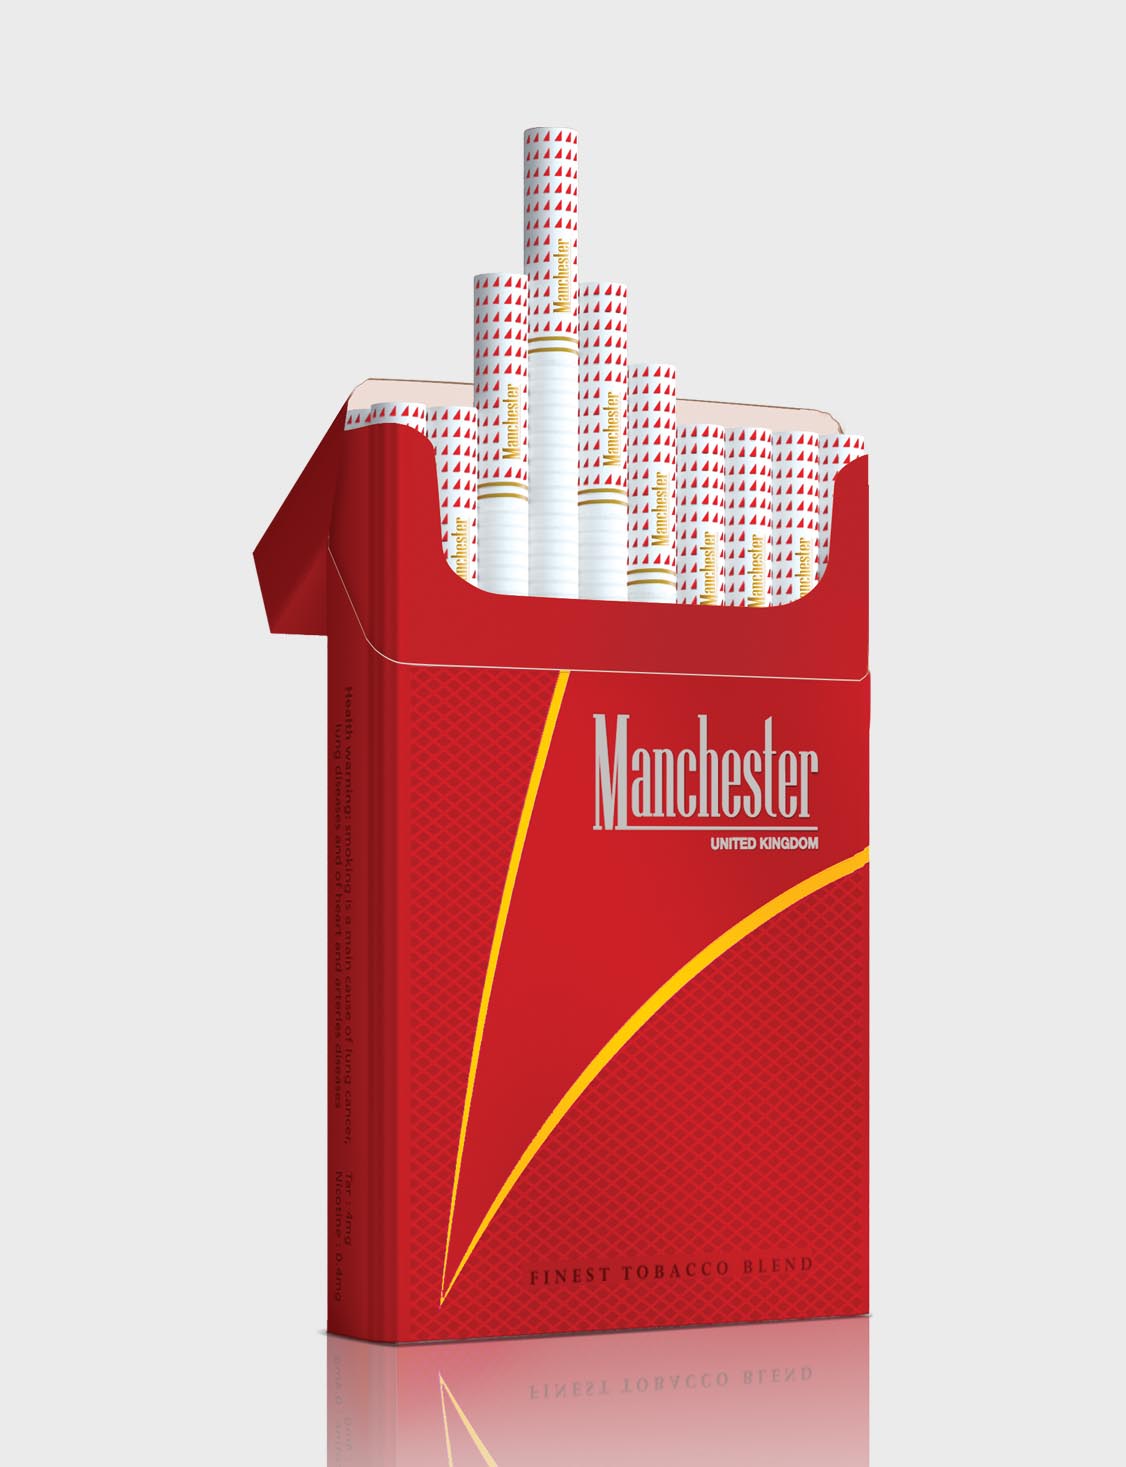 Manchester Nano Red cigarettes 10 cartons - Click Image to Close